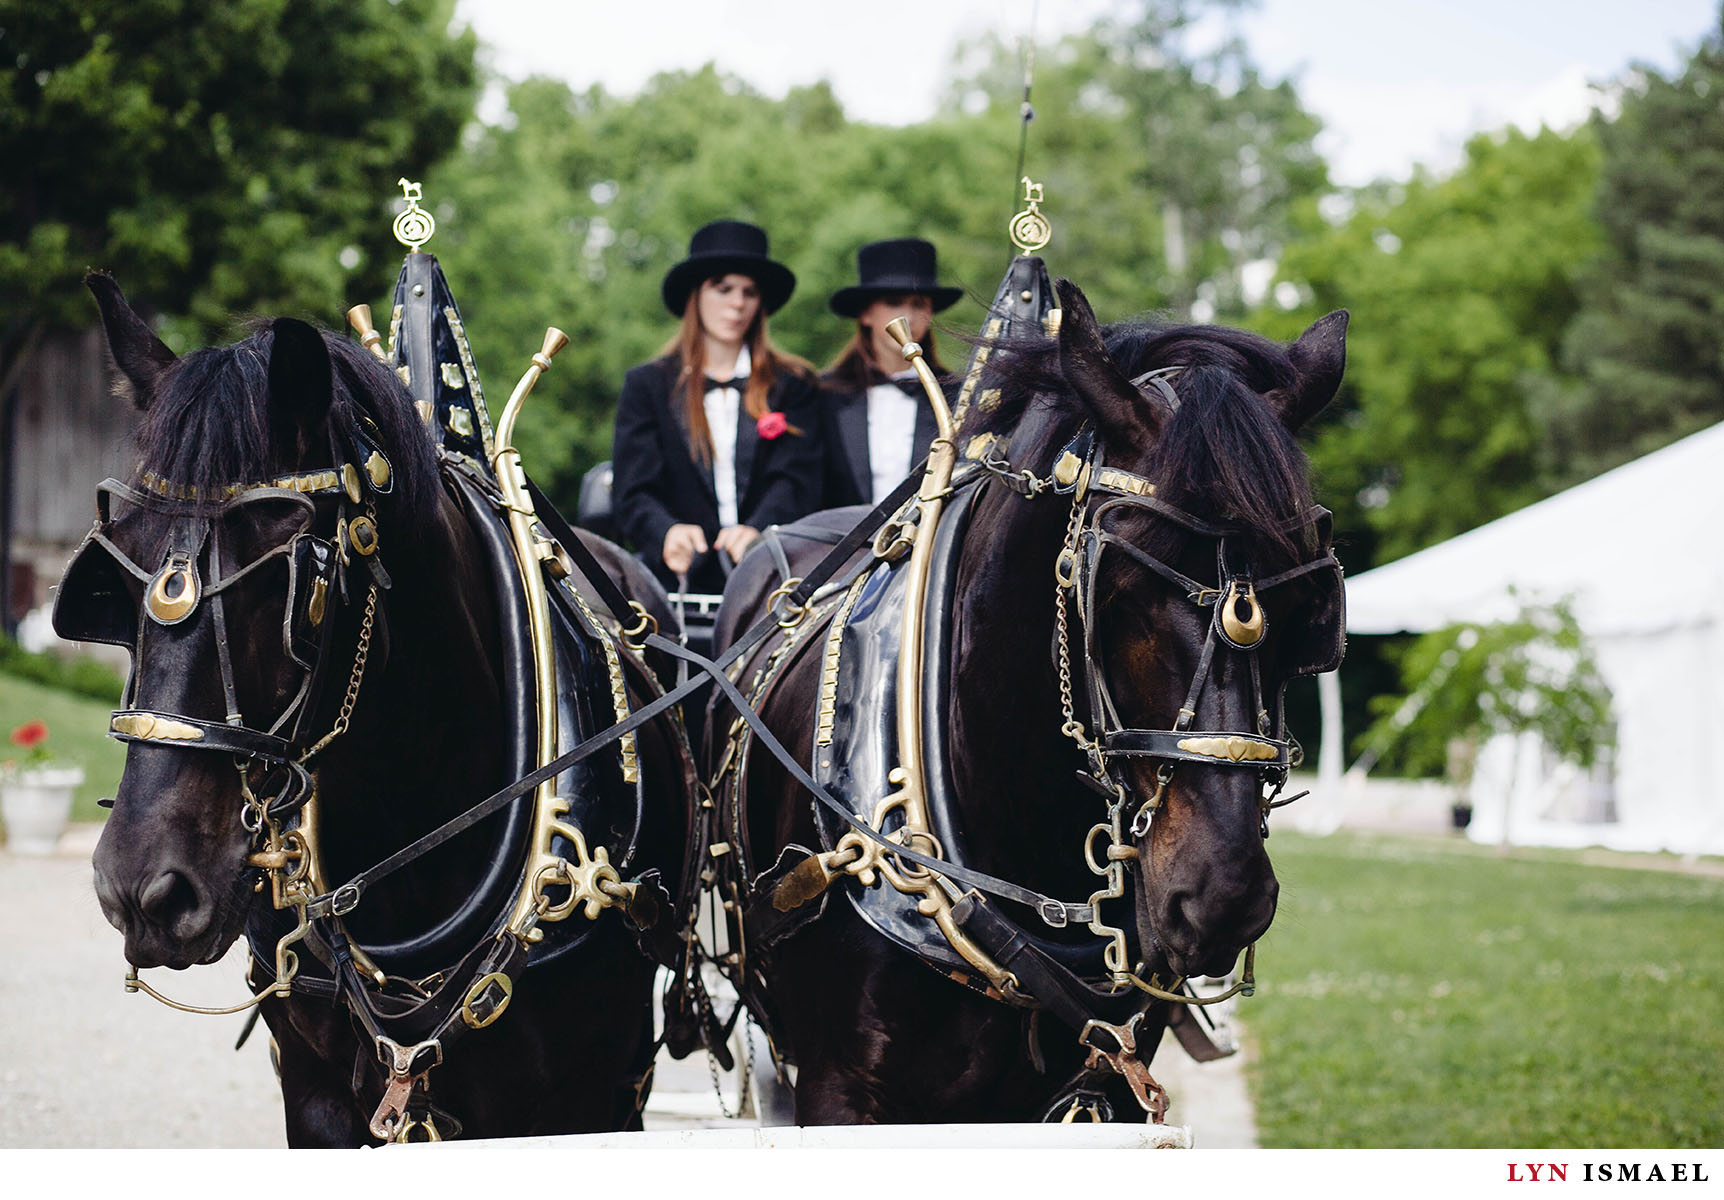 Black horses used on the bridal carriage in Nithridge Estate.